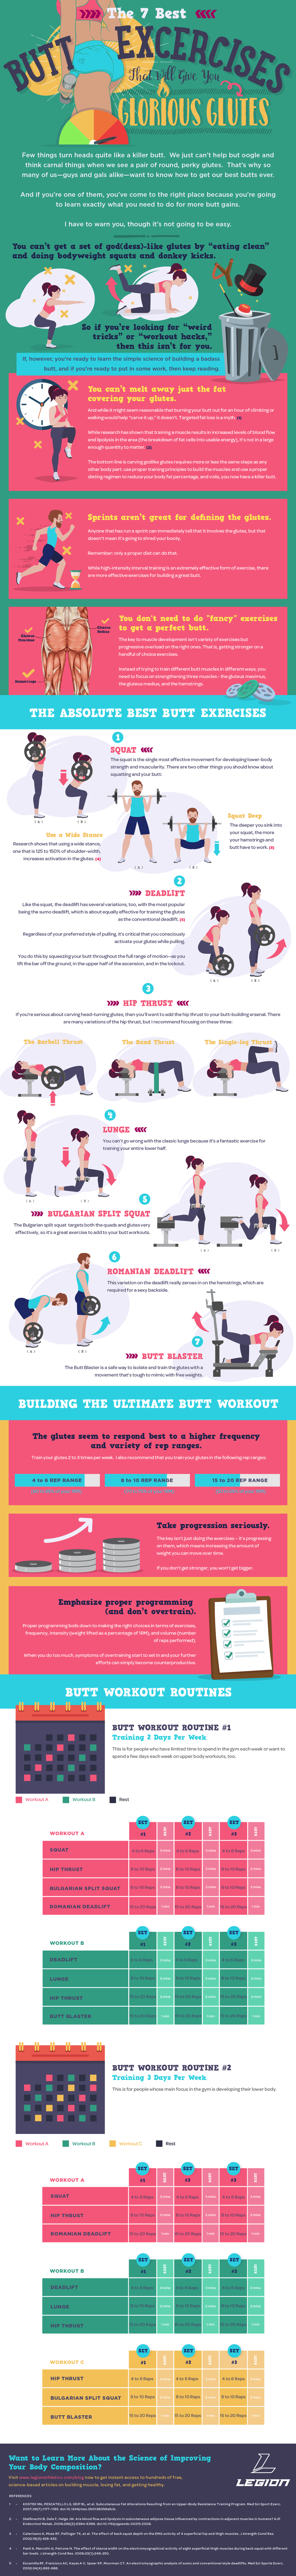 The 7 Best Butt Exercises